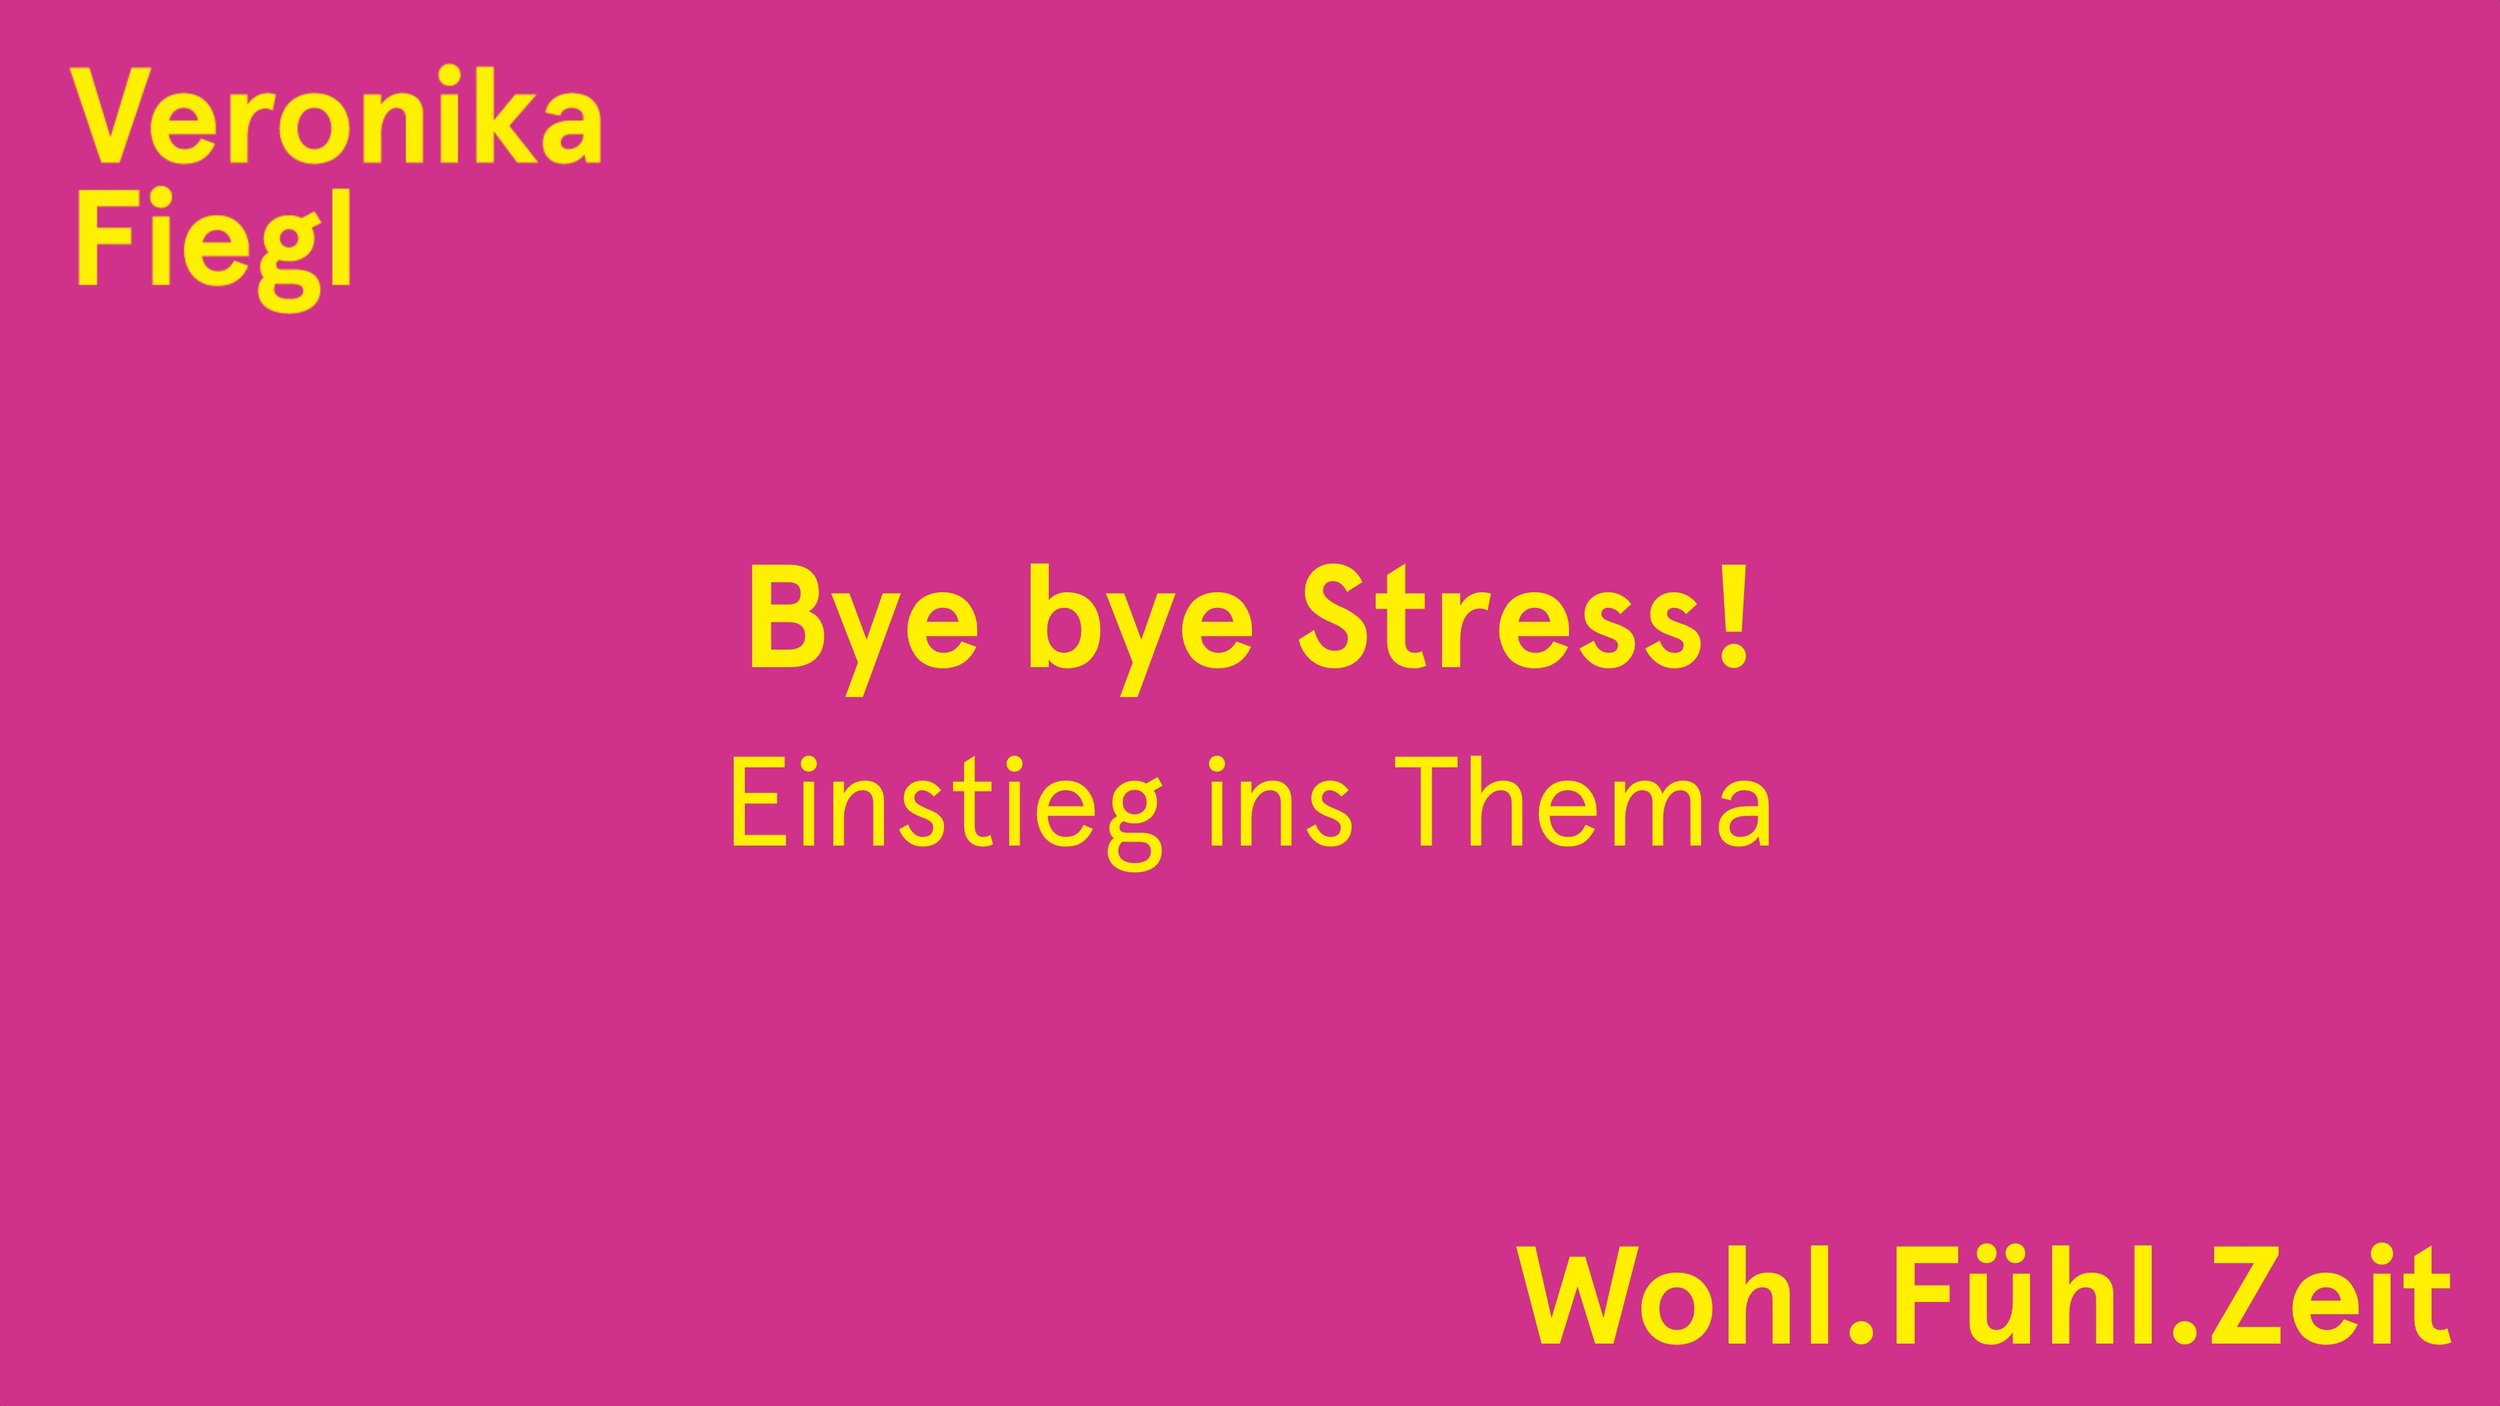 1. Einstieg ins Thema: Bye, Bye, Stress (6:48)